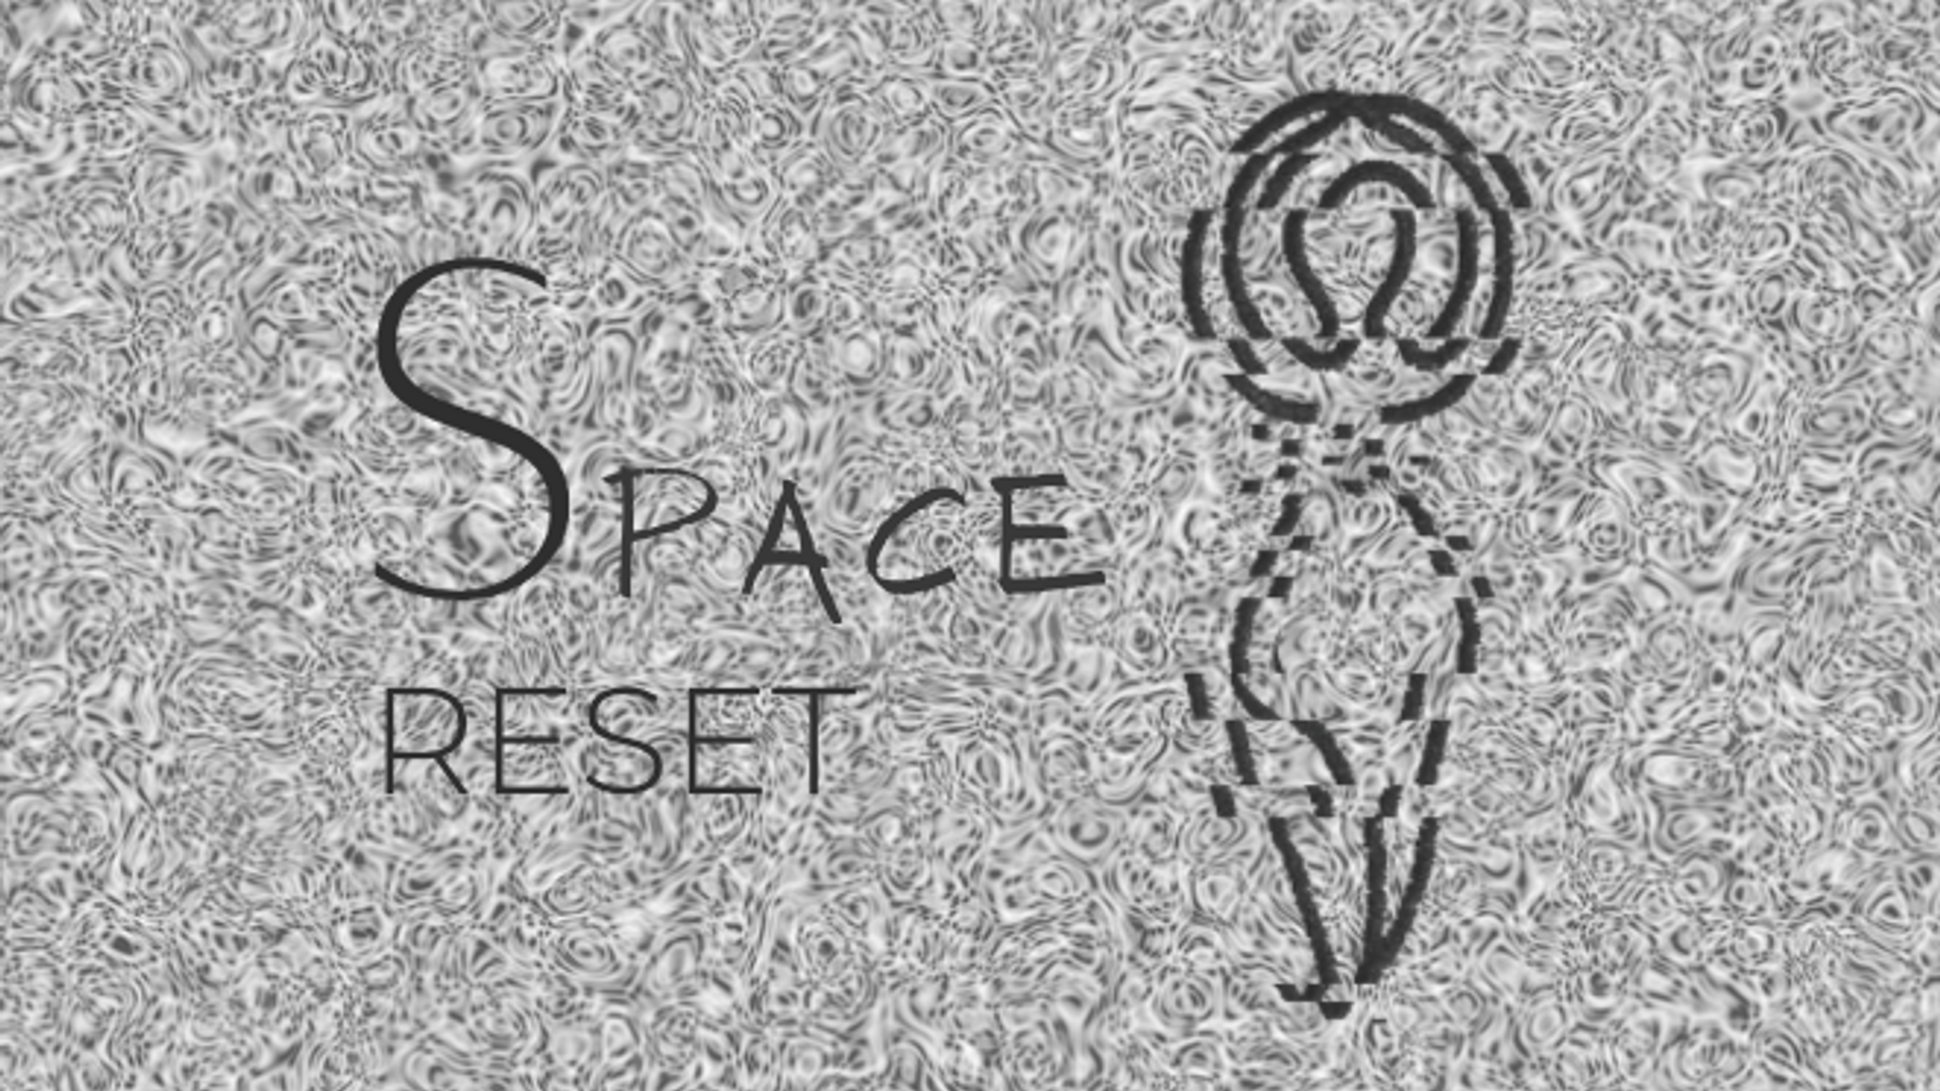 Space reset